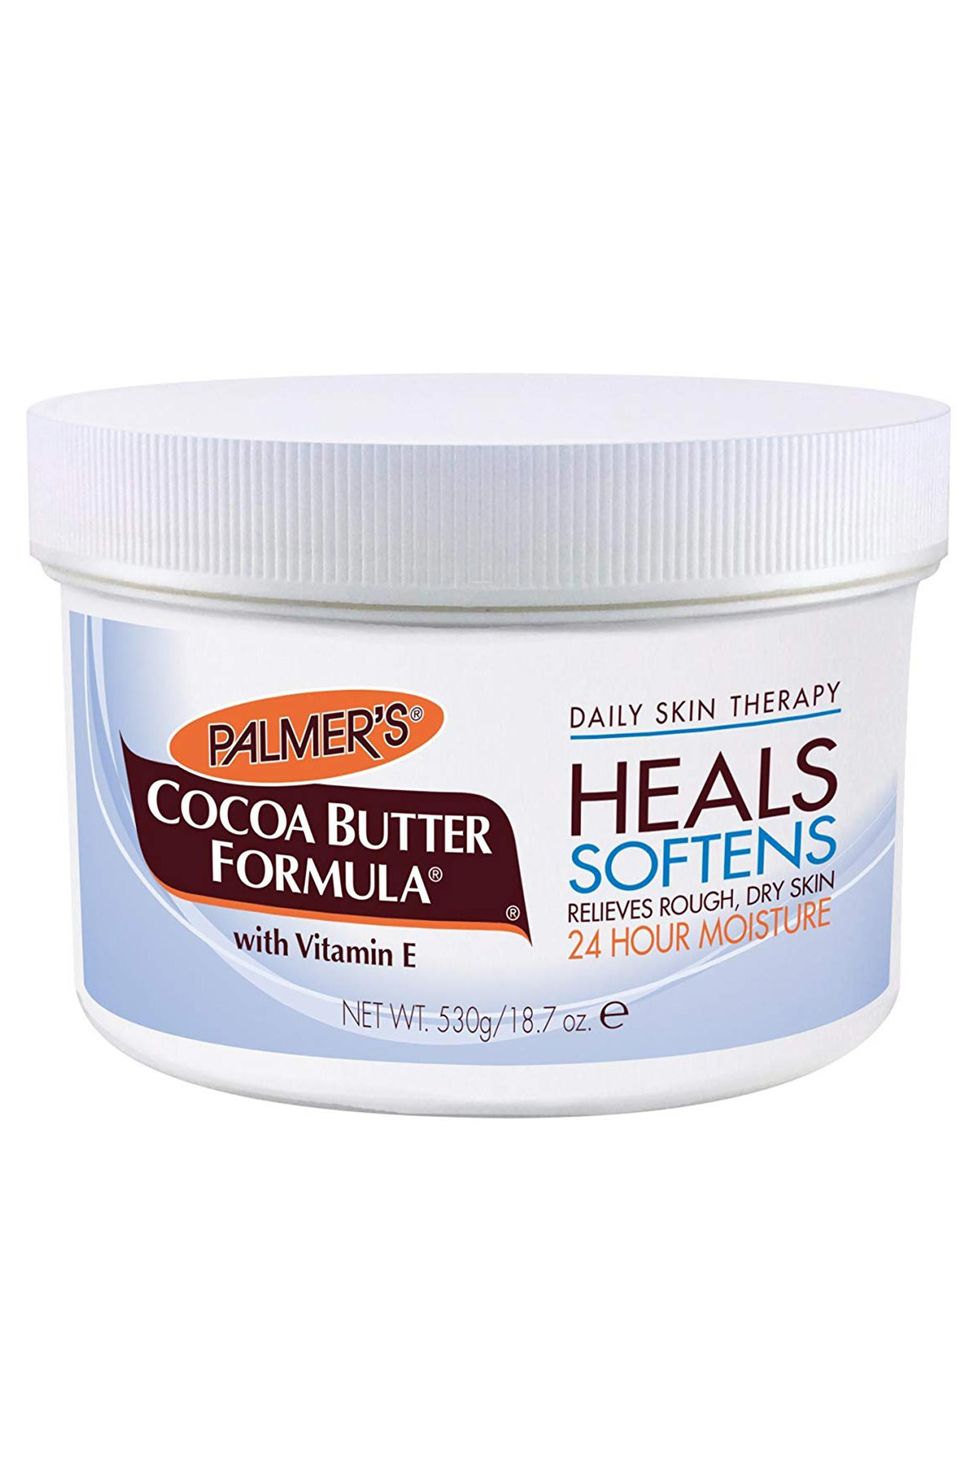 Appal importeren beest 11 Body Butters for Dry Winter Skin - Best Body Butters